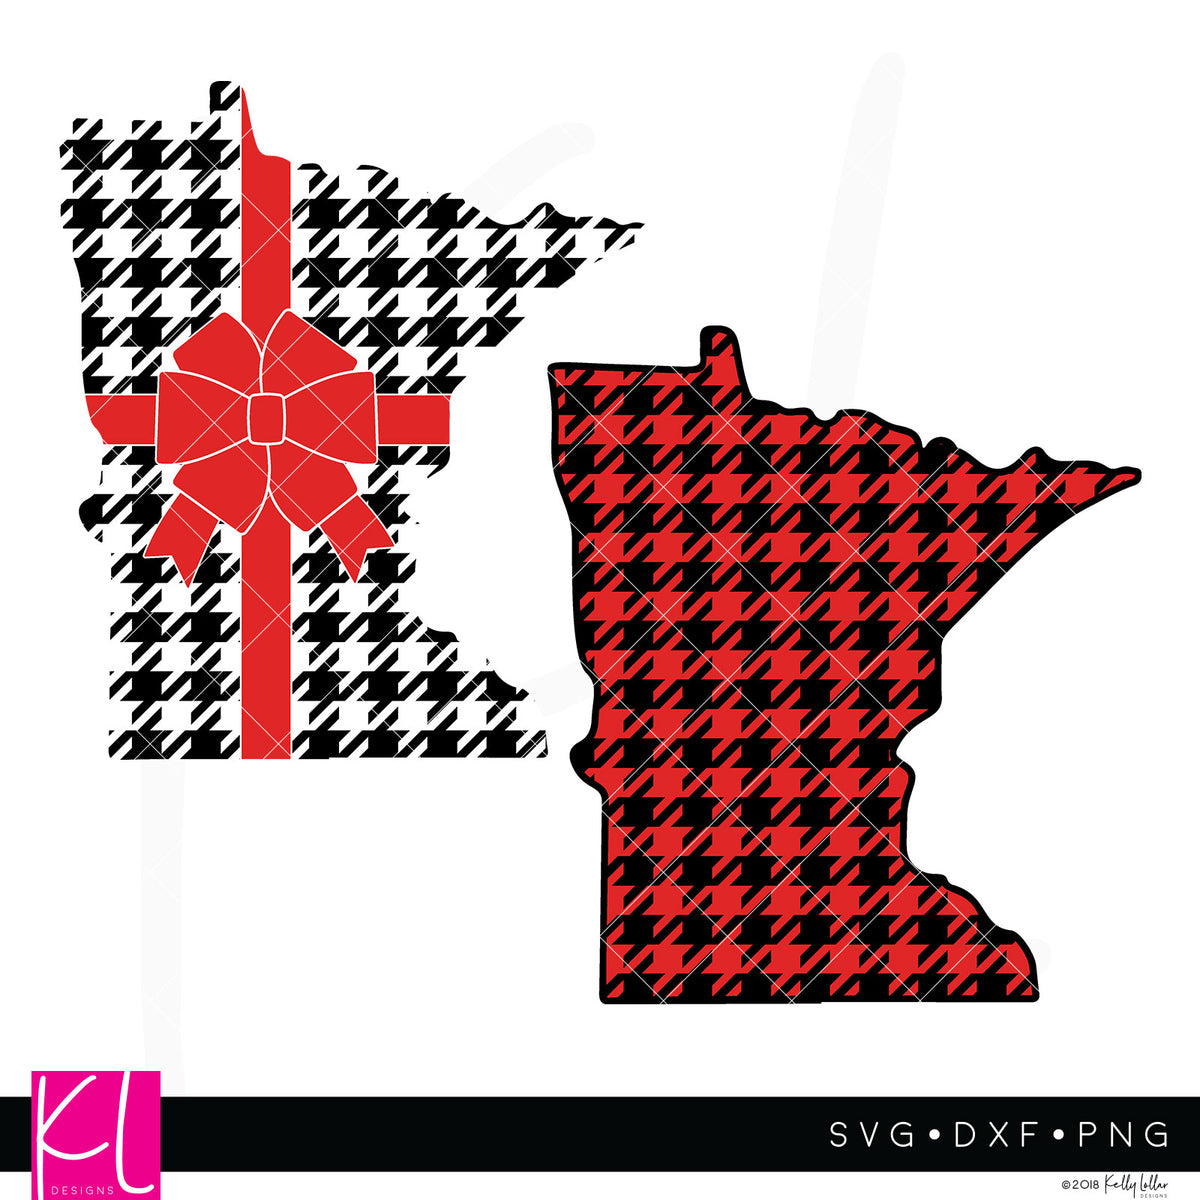 Minnesota State Bundle | SVG DXF EPS PNG Cut Files